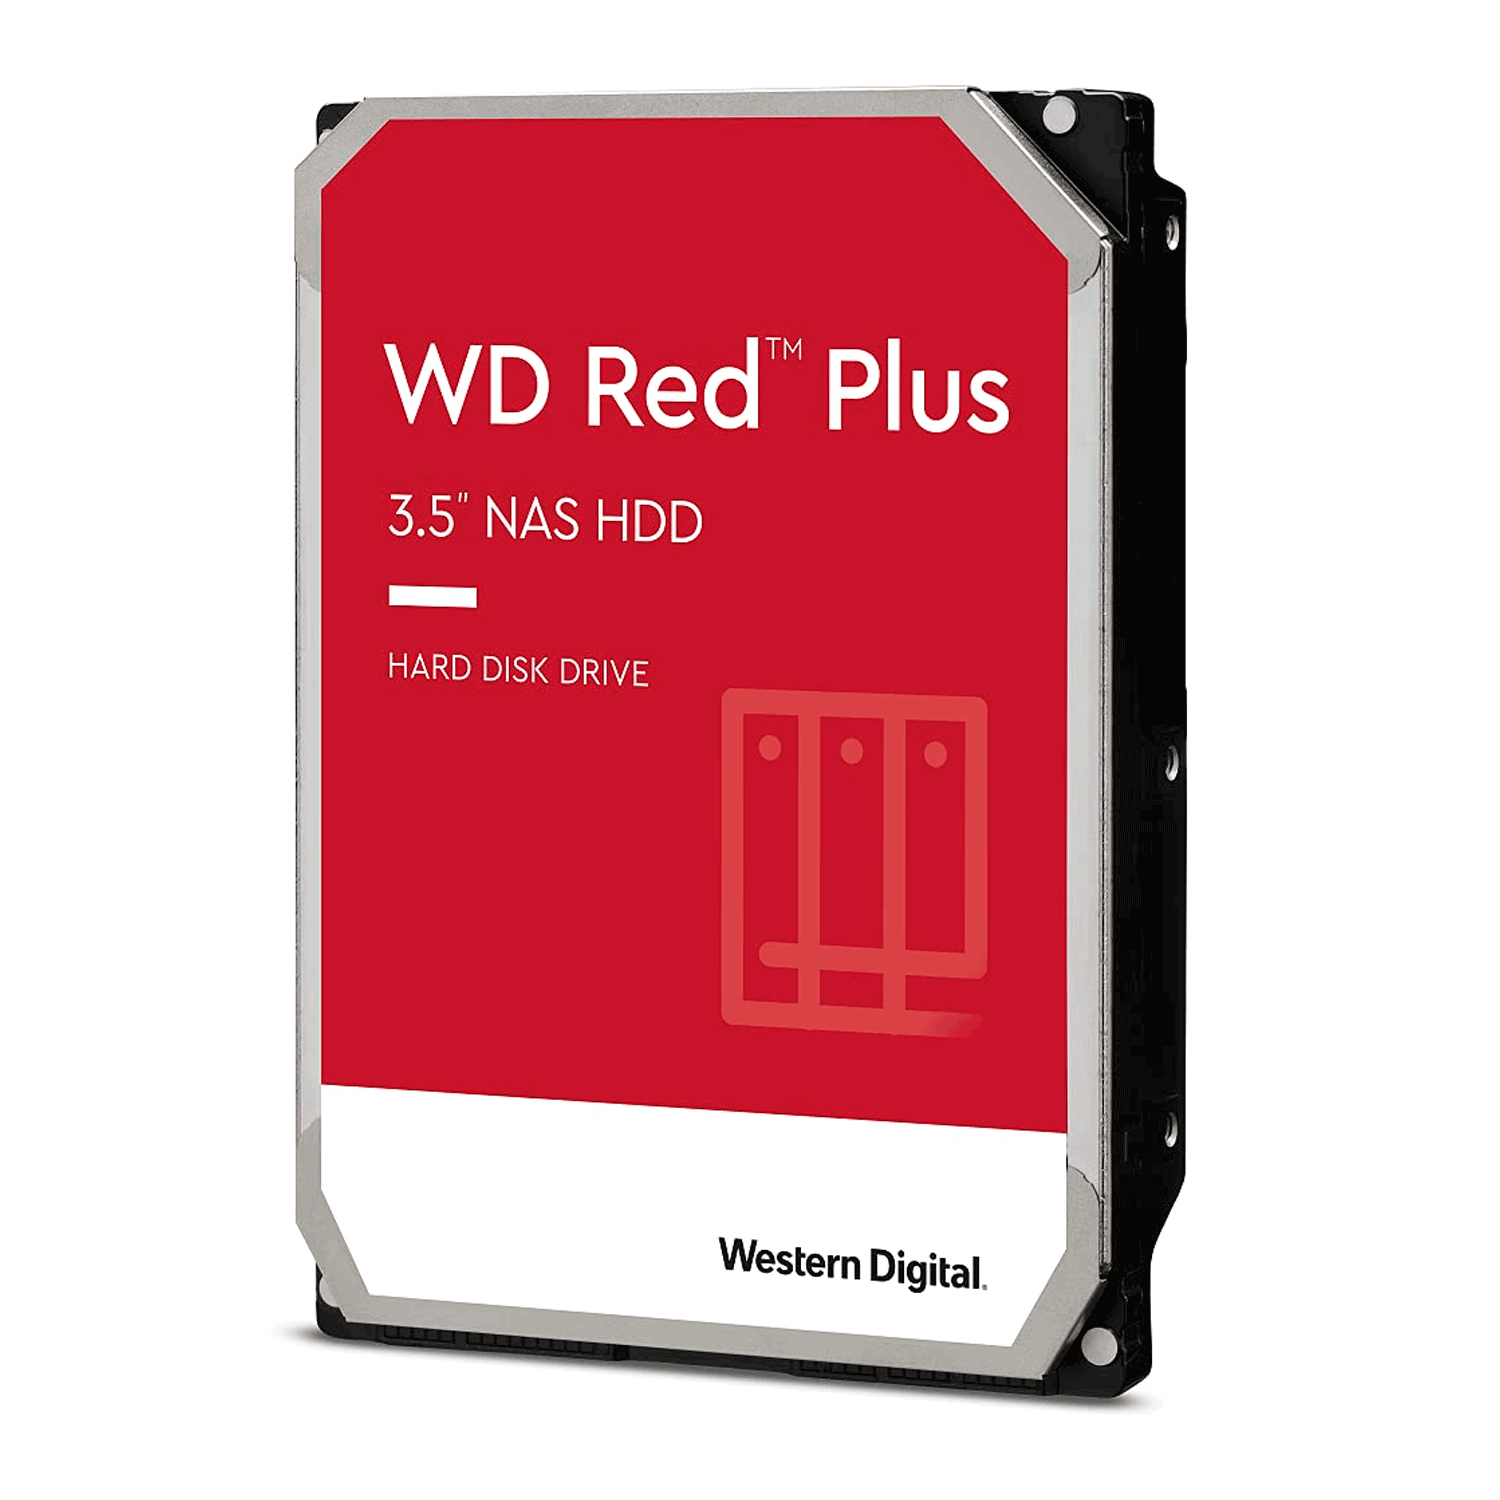 HD Western Digital WD Red Plus 6TB / SATA3 / NAS / 5400PRM / 256MB - (WD60EFPX)
